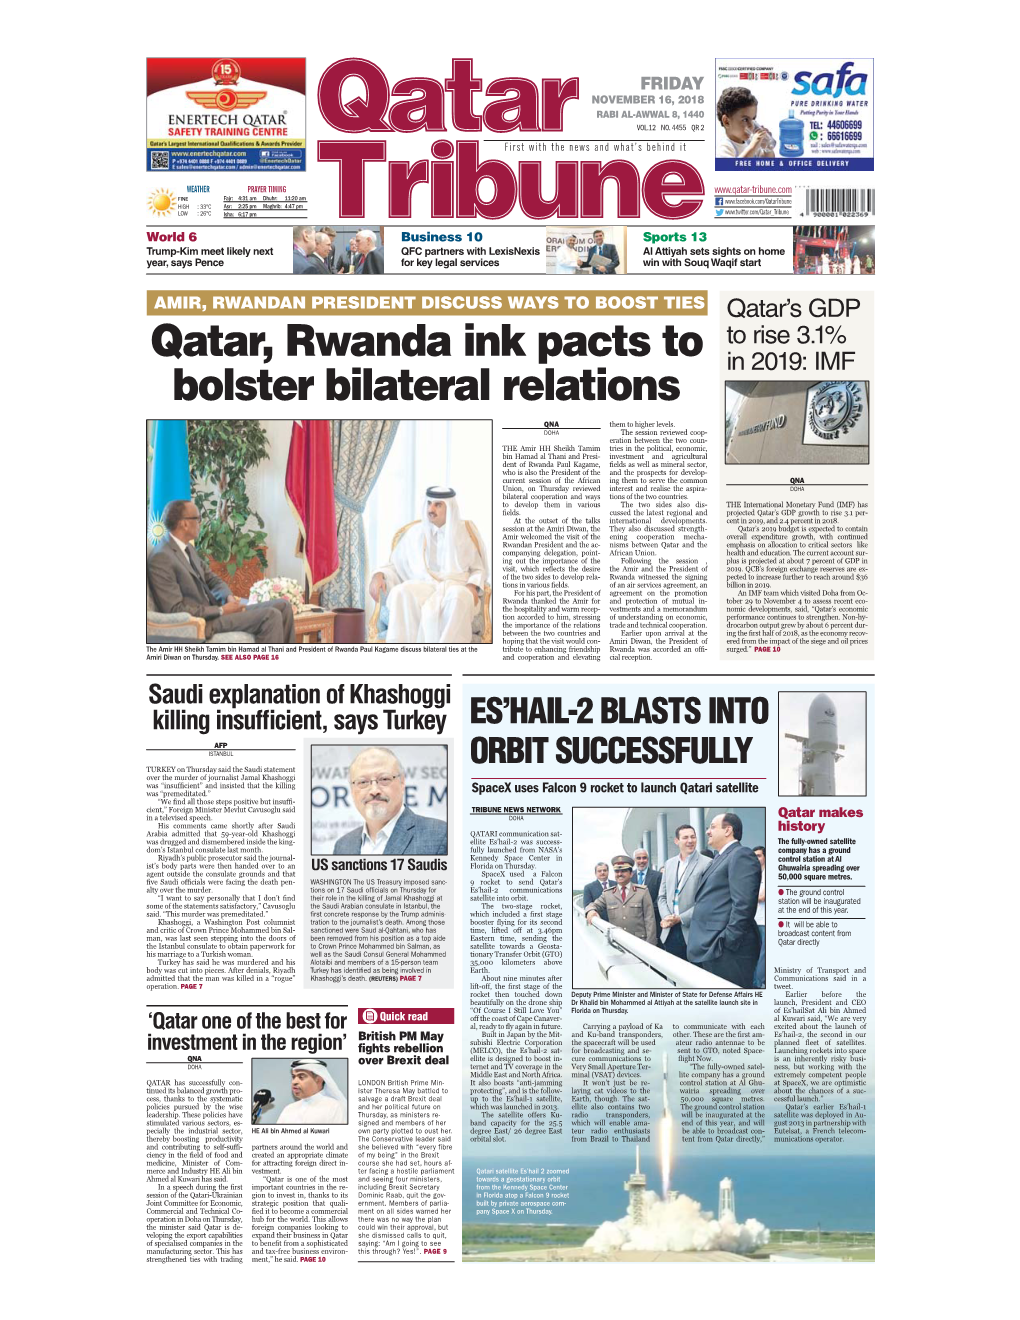 Qatar, Rwanda Ink Pacts to Bolster Bilateral Relations